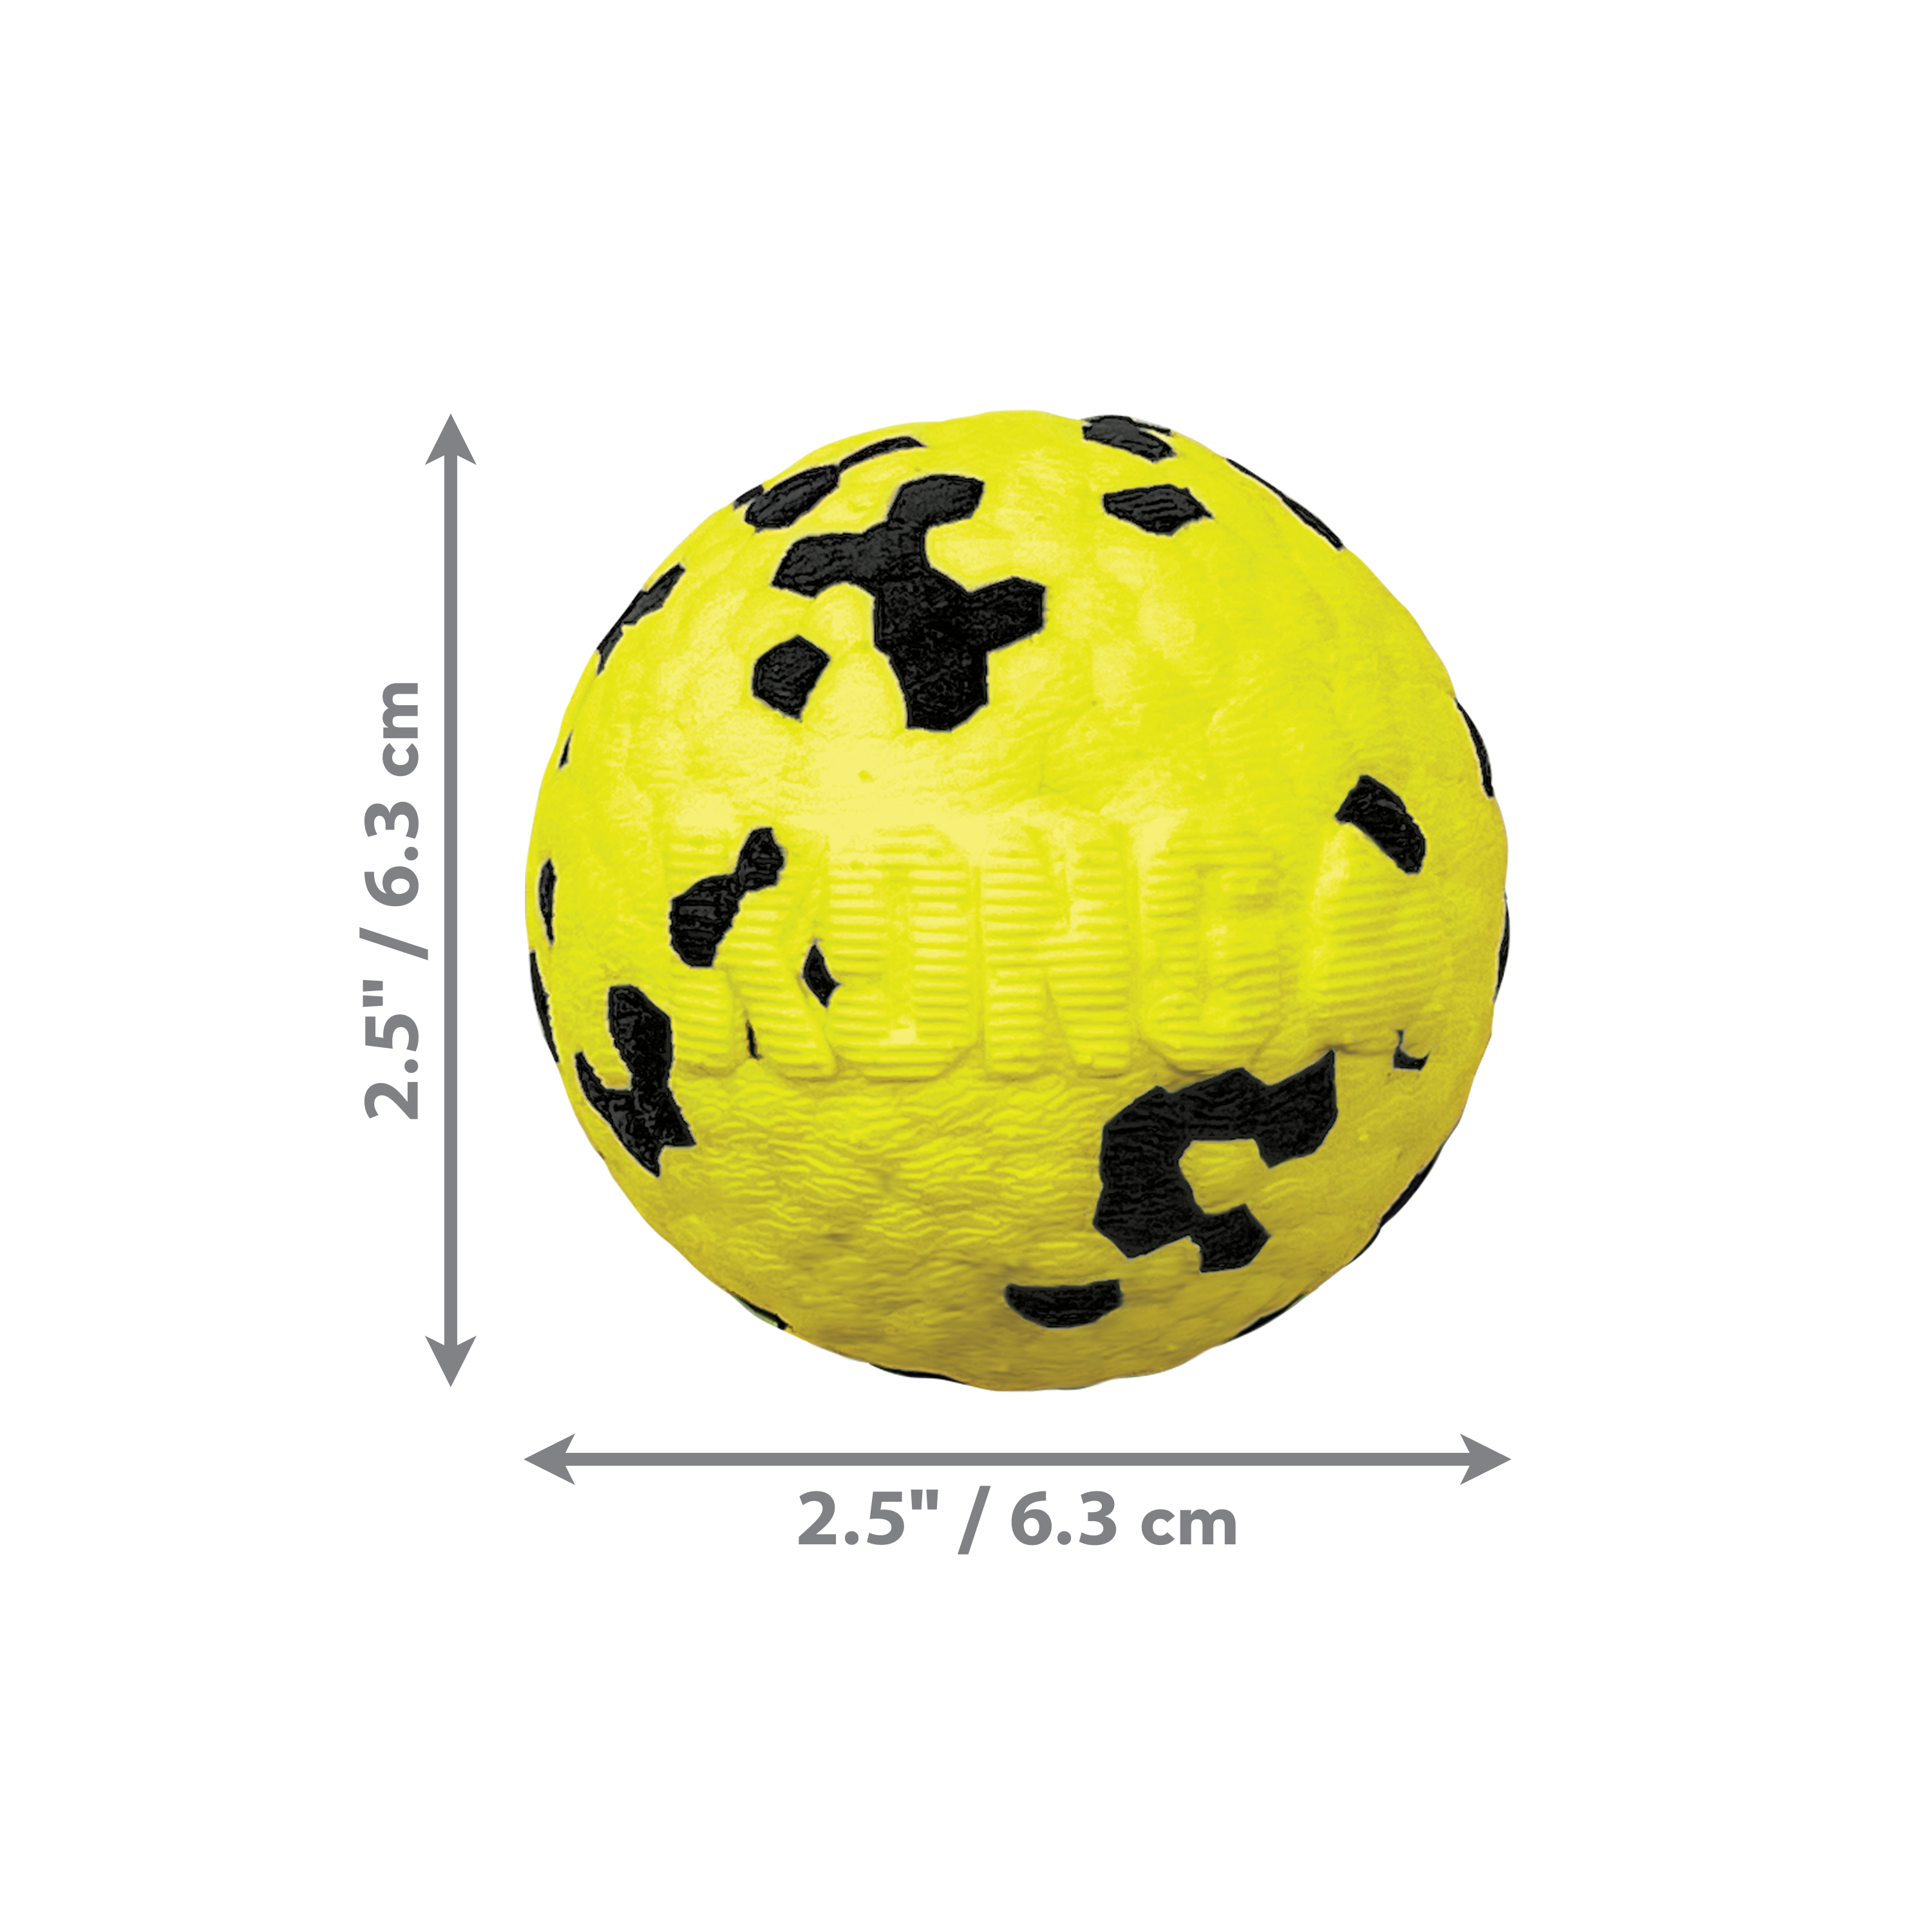 Reflex Ball dimoffpack image du produit